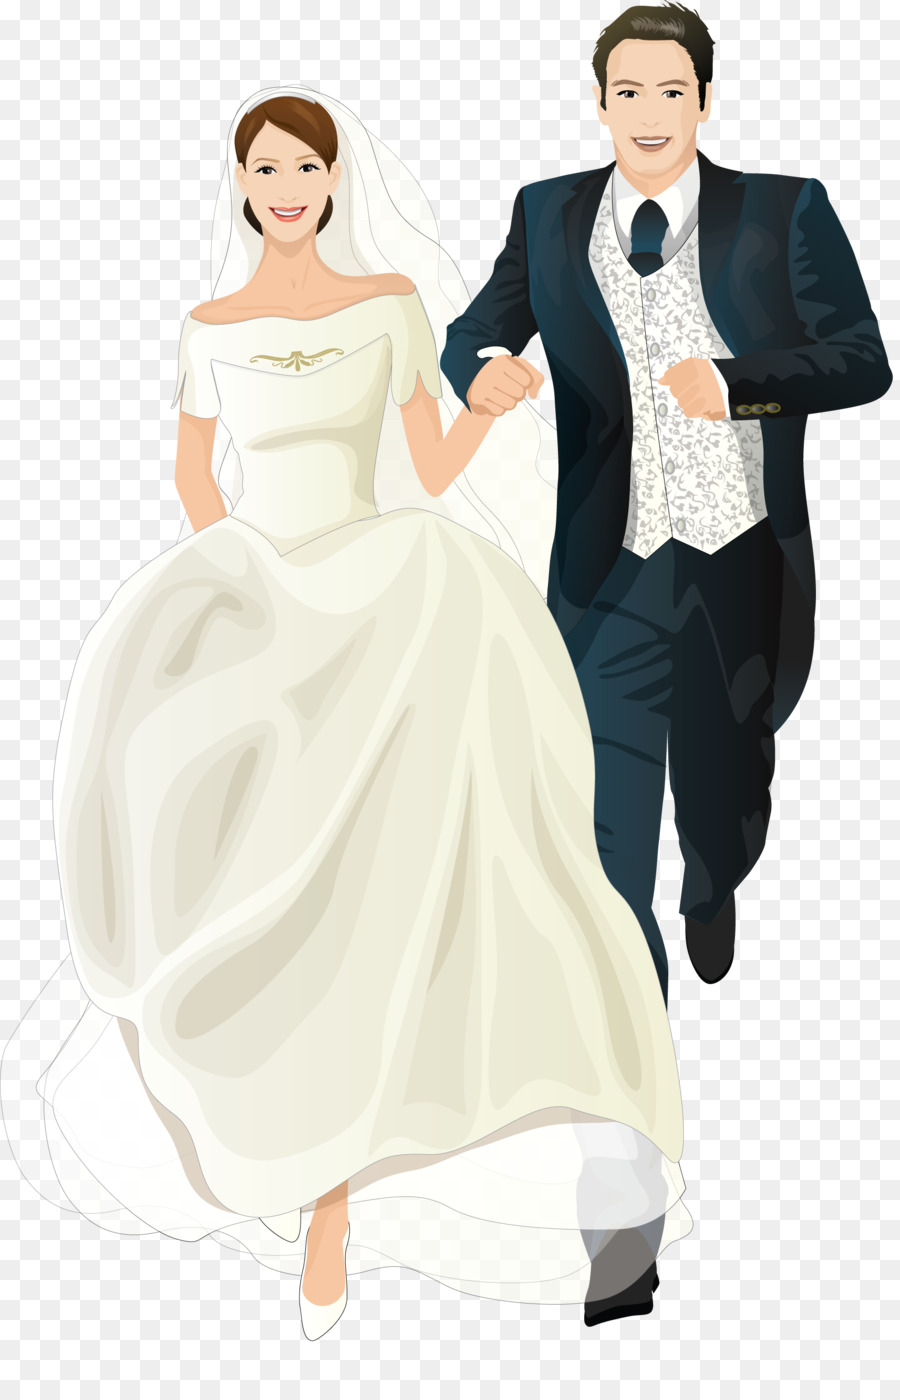 Wedding invitation Bridegroom Marriage - bride png download - 1713*2638 - Free Transparent Wedding Invitation png Download.